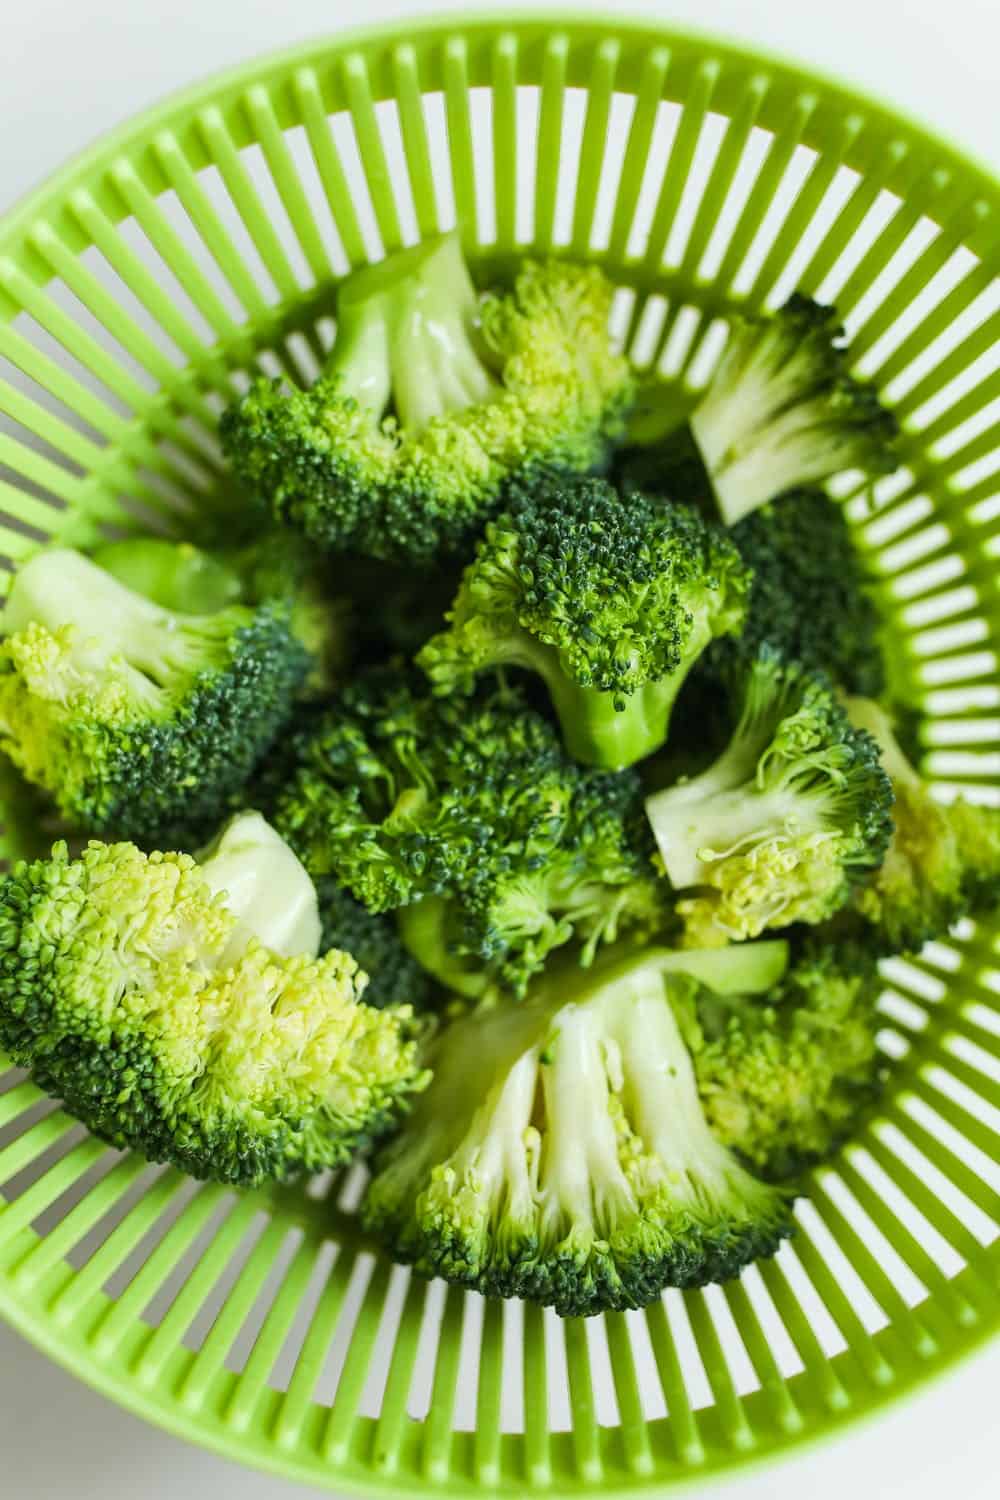 Broccoli in a green bowl